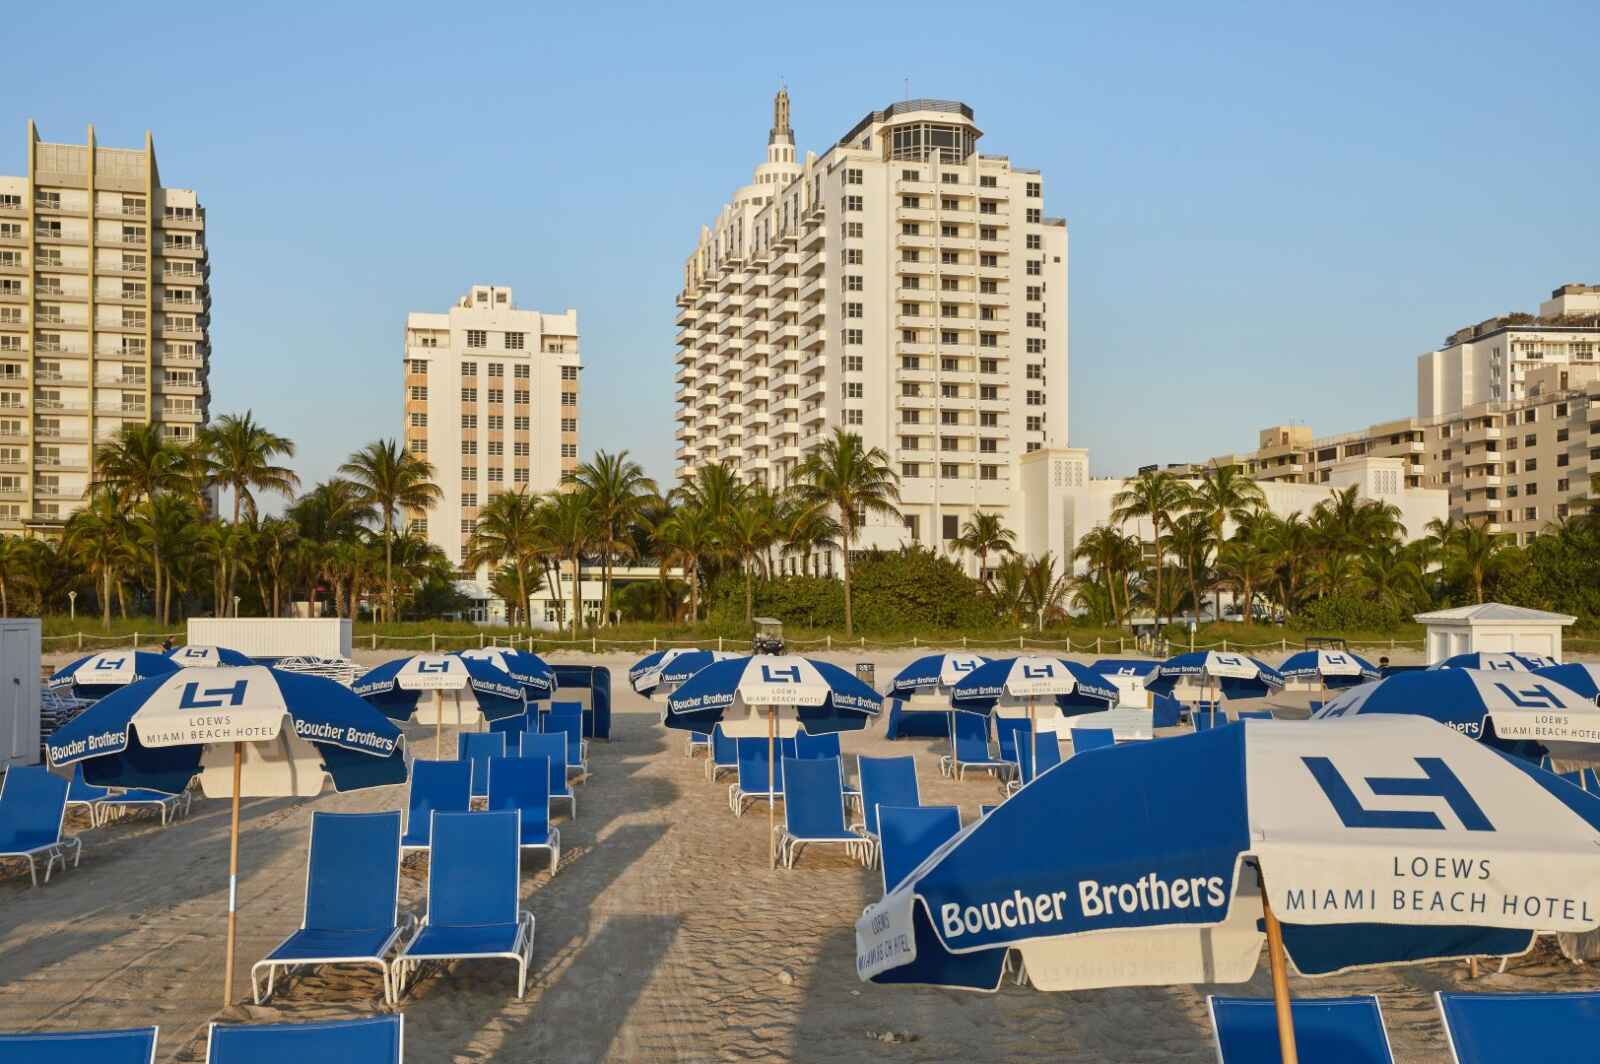 Etats-Unis - Sud des Etats-Unis - Floride - Miami - Loews Miami Beach Hôtel 4*